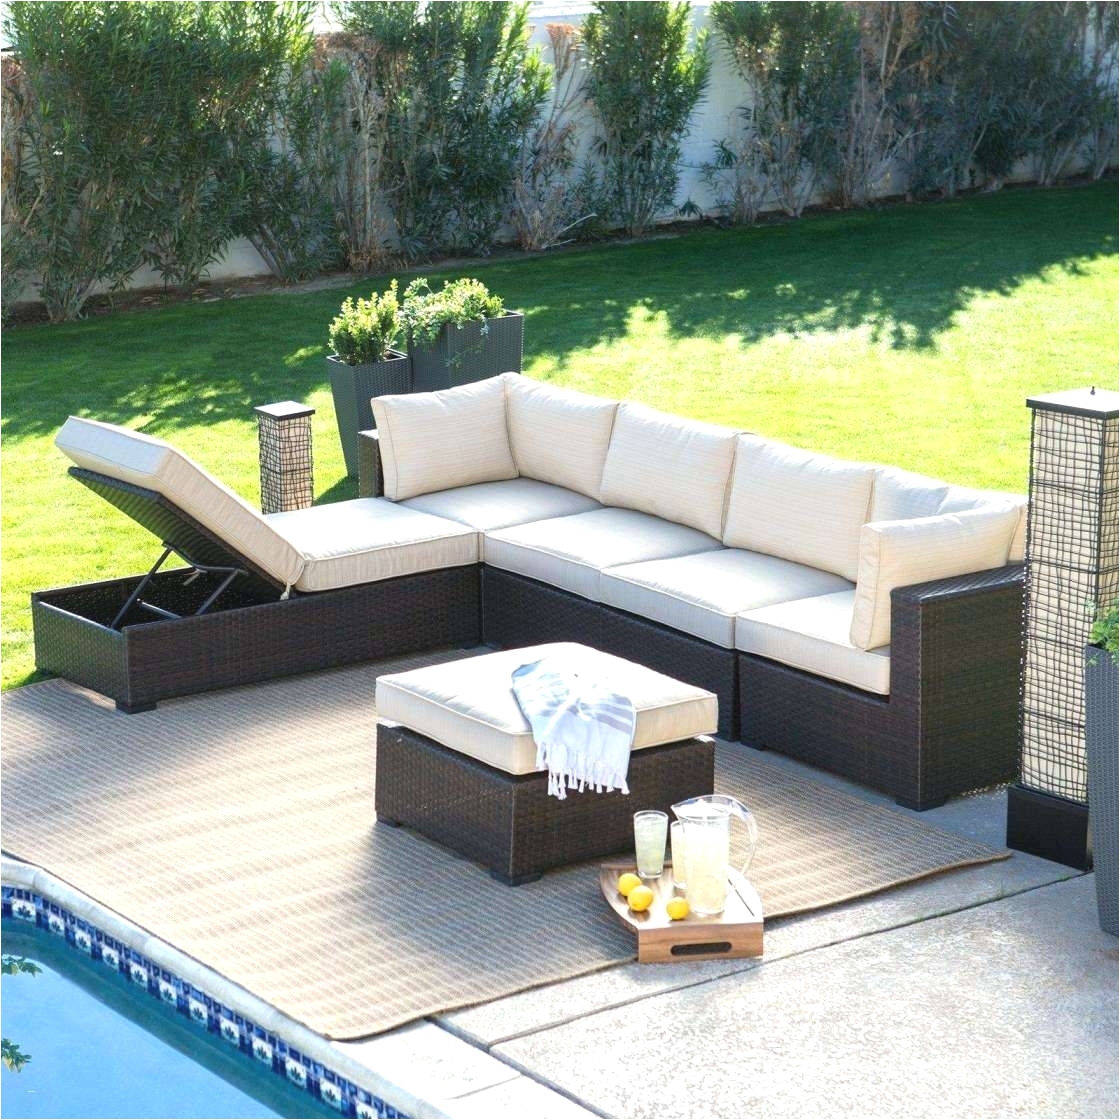 Ocala4sale Furniture Sensational sofas for Sale by Owner